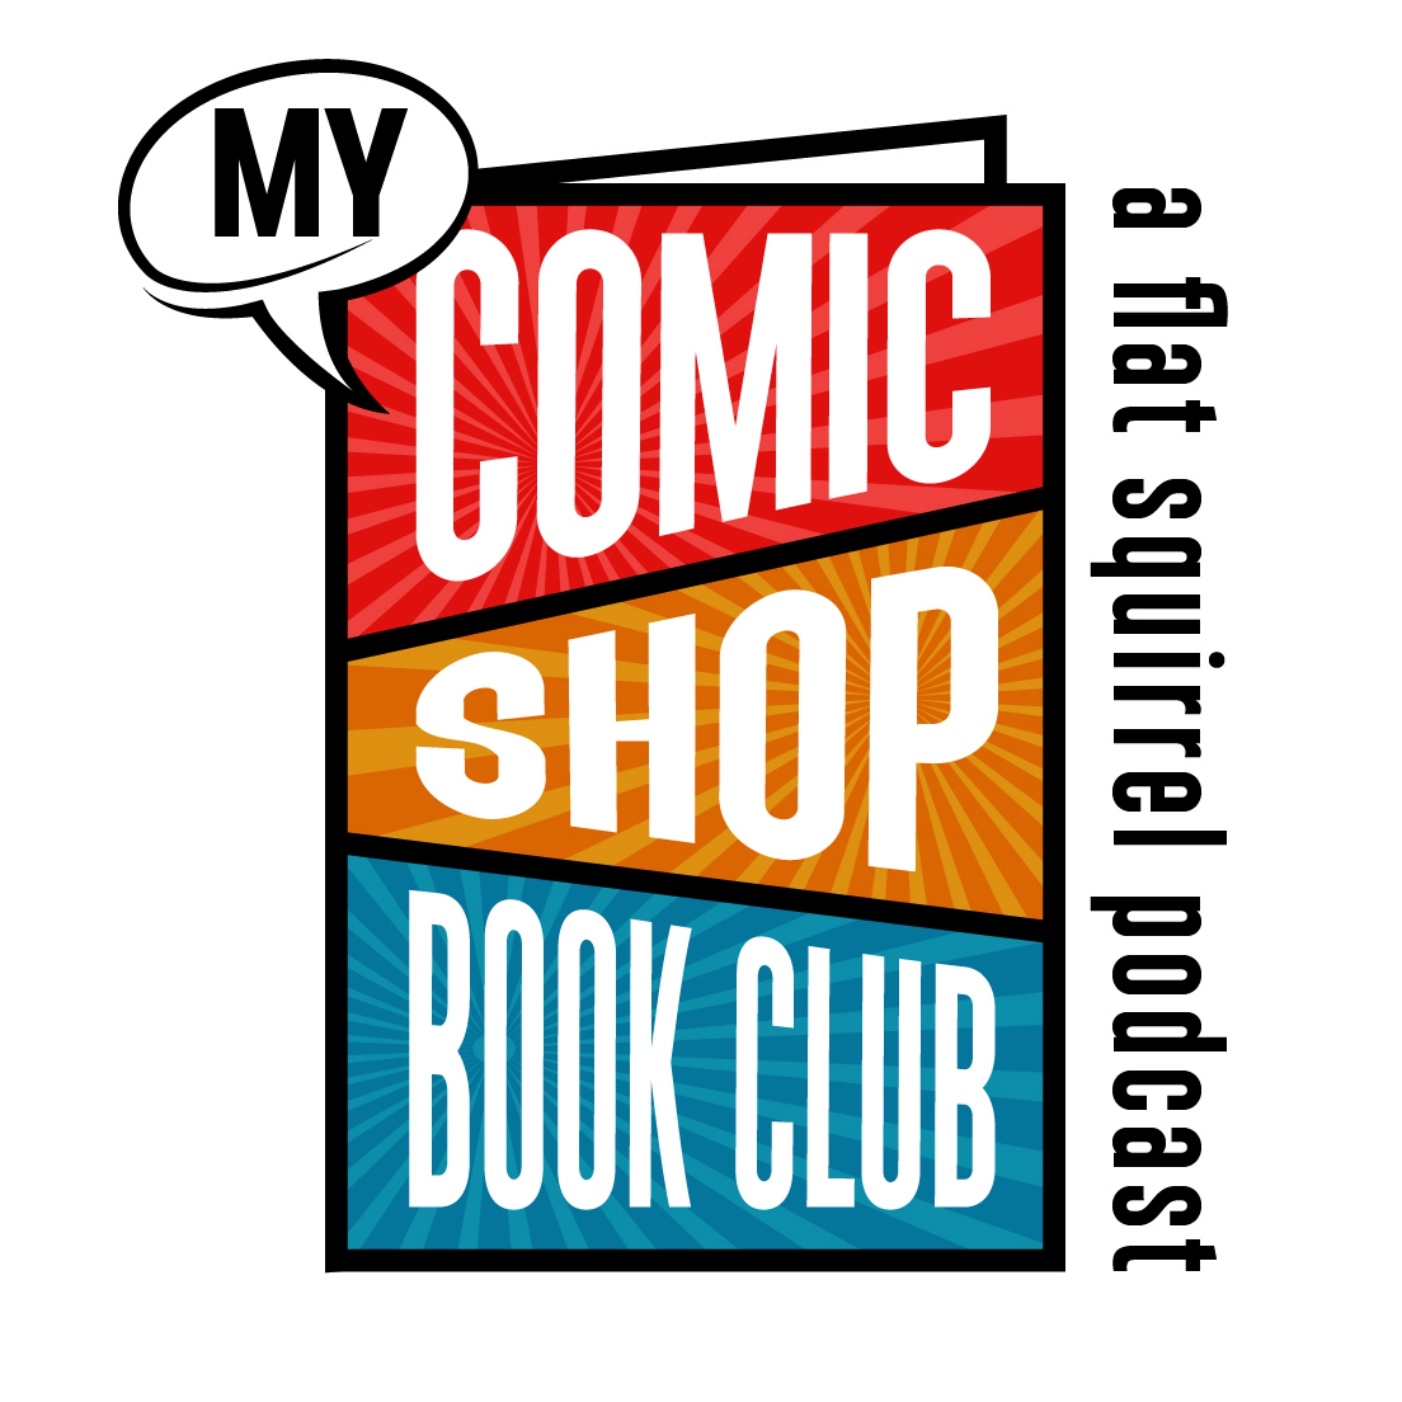 Artwork for My Comic Shop Book Club